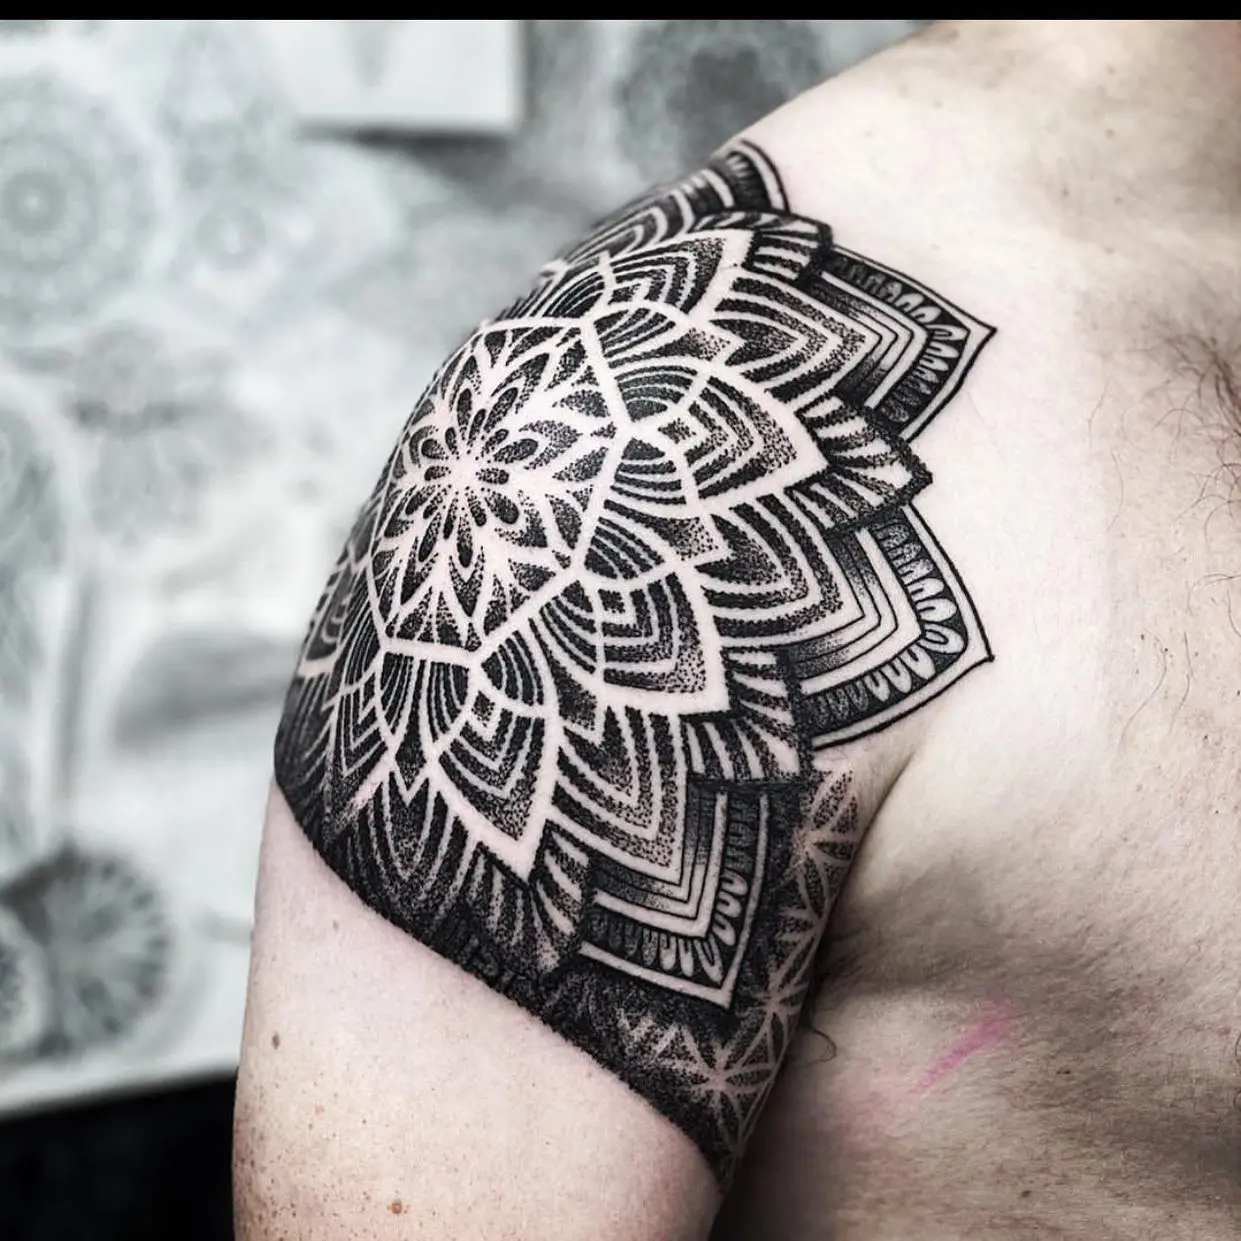 Rotten Mind Tattoo - Get a dotwork tattoo in Stockholm